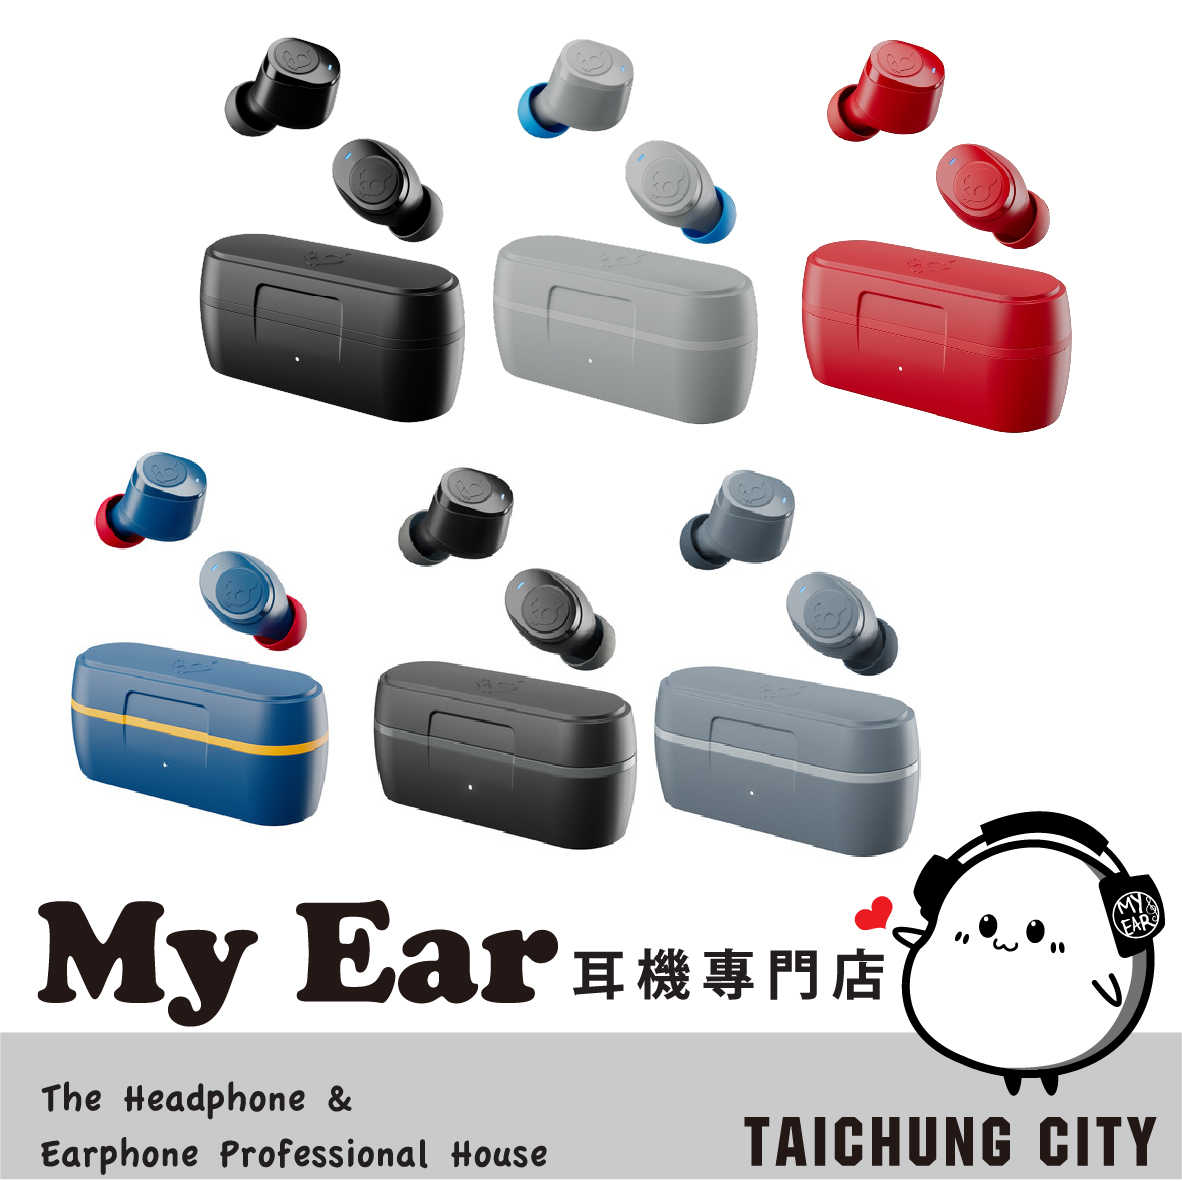 SkullCandy 骷髏糖 JIB 支援單耳使用 真無線 藍芽 耳機 | My Ear 耳機專門店